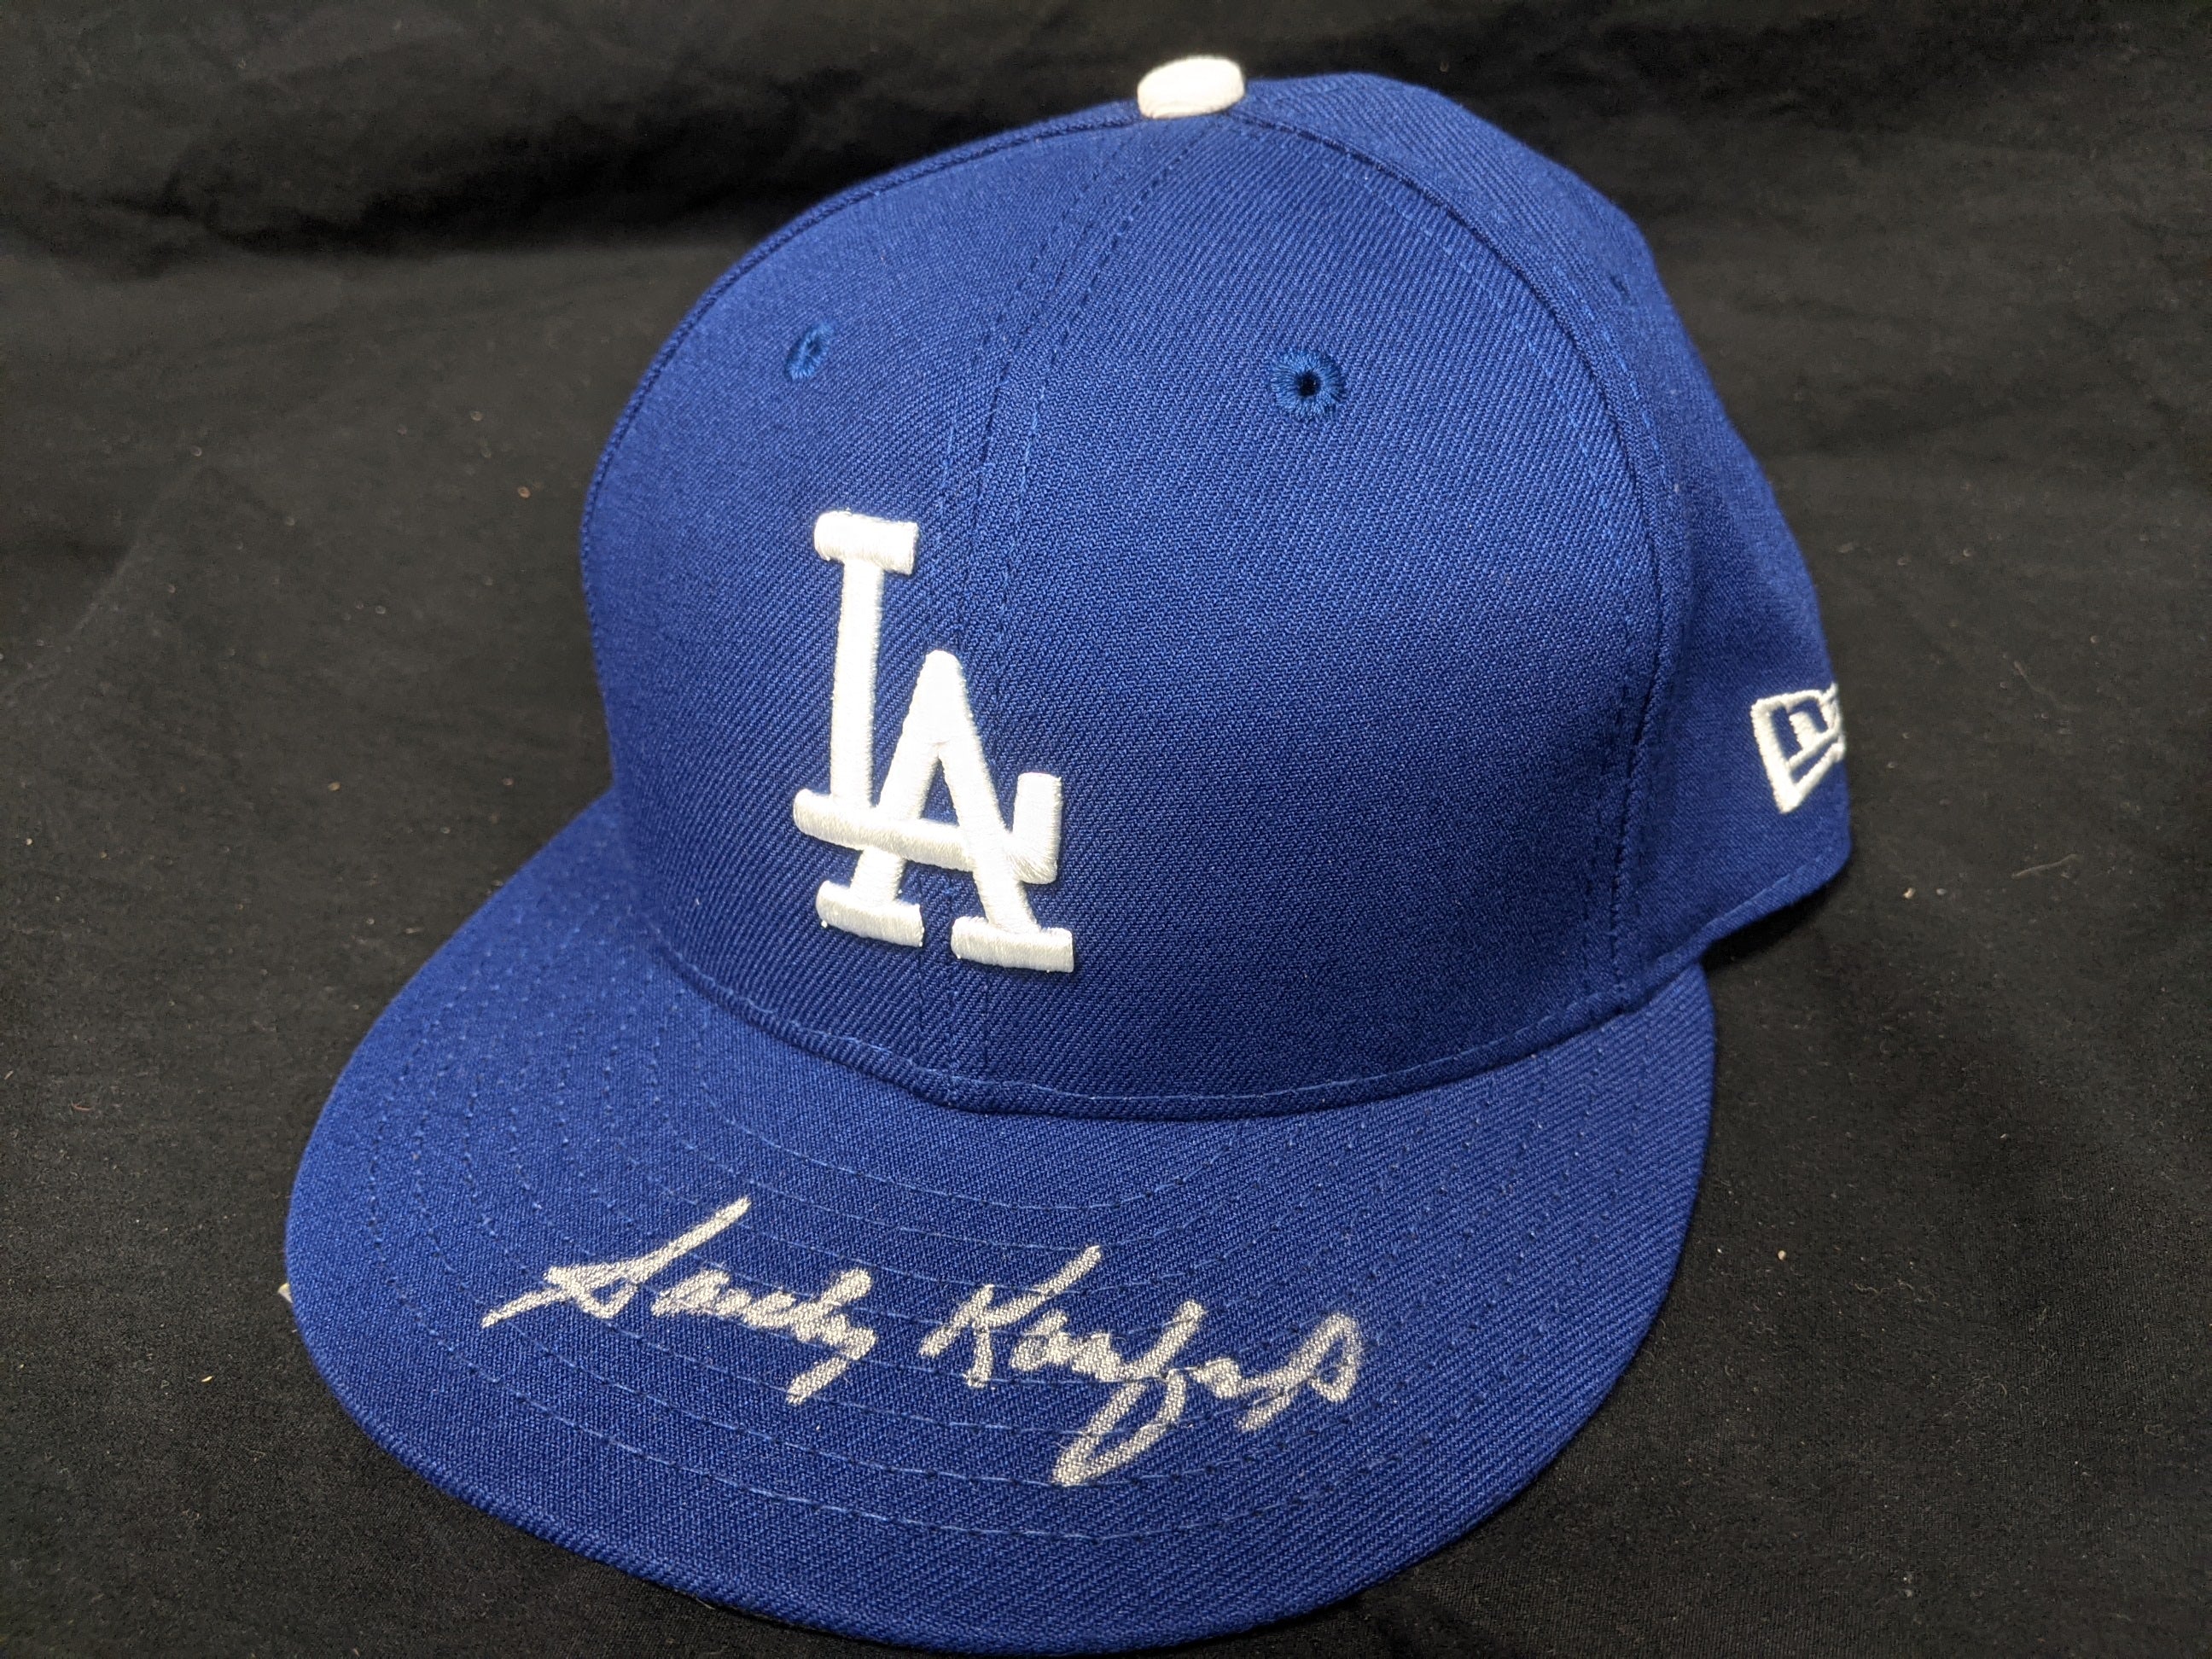 Sold at Auction: Sandy Koufax autographed Los Angeles Dodgers